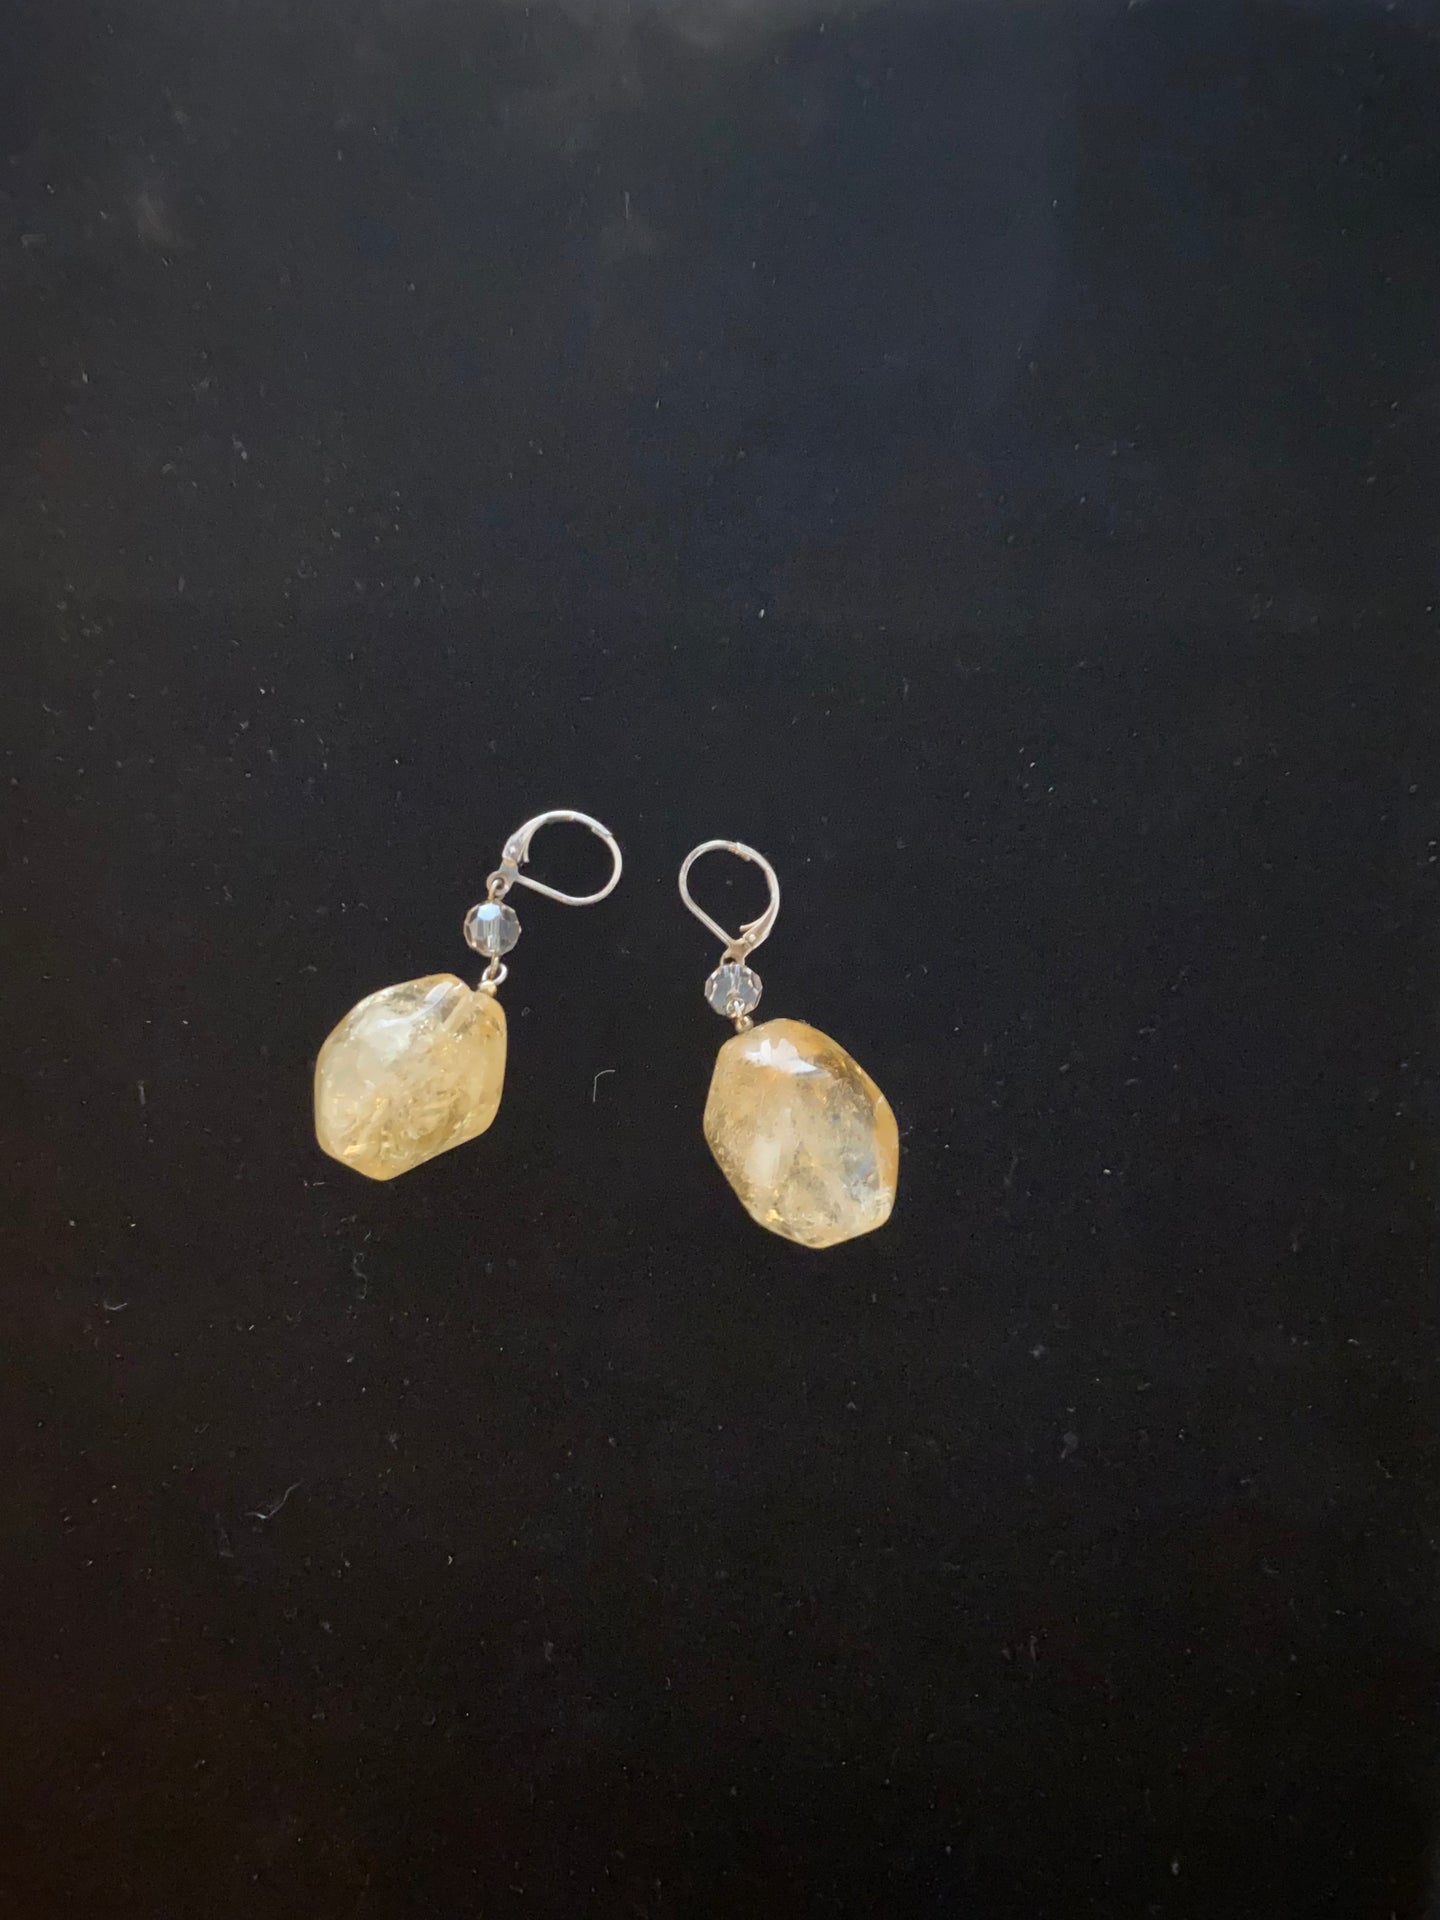 Yellow quartz drop earrings